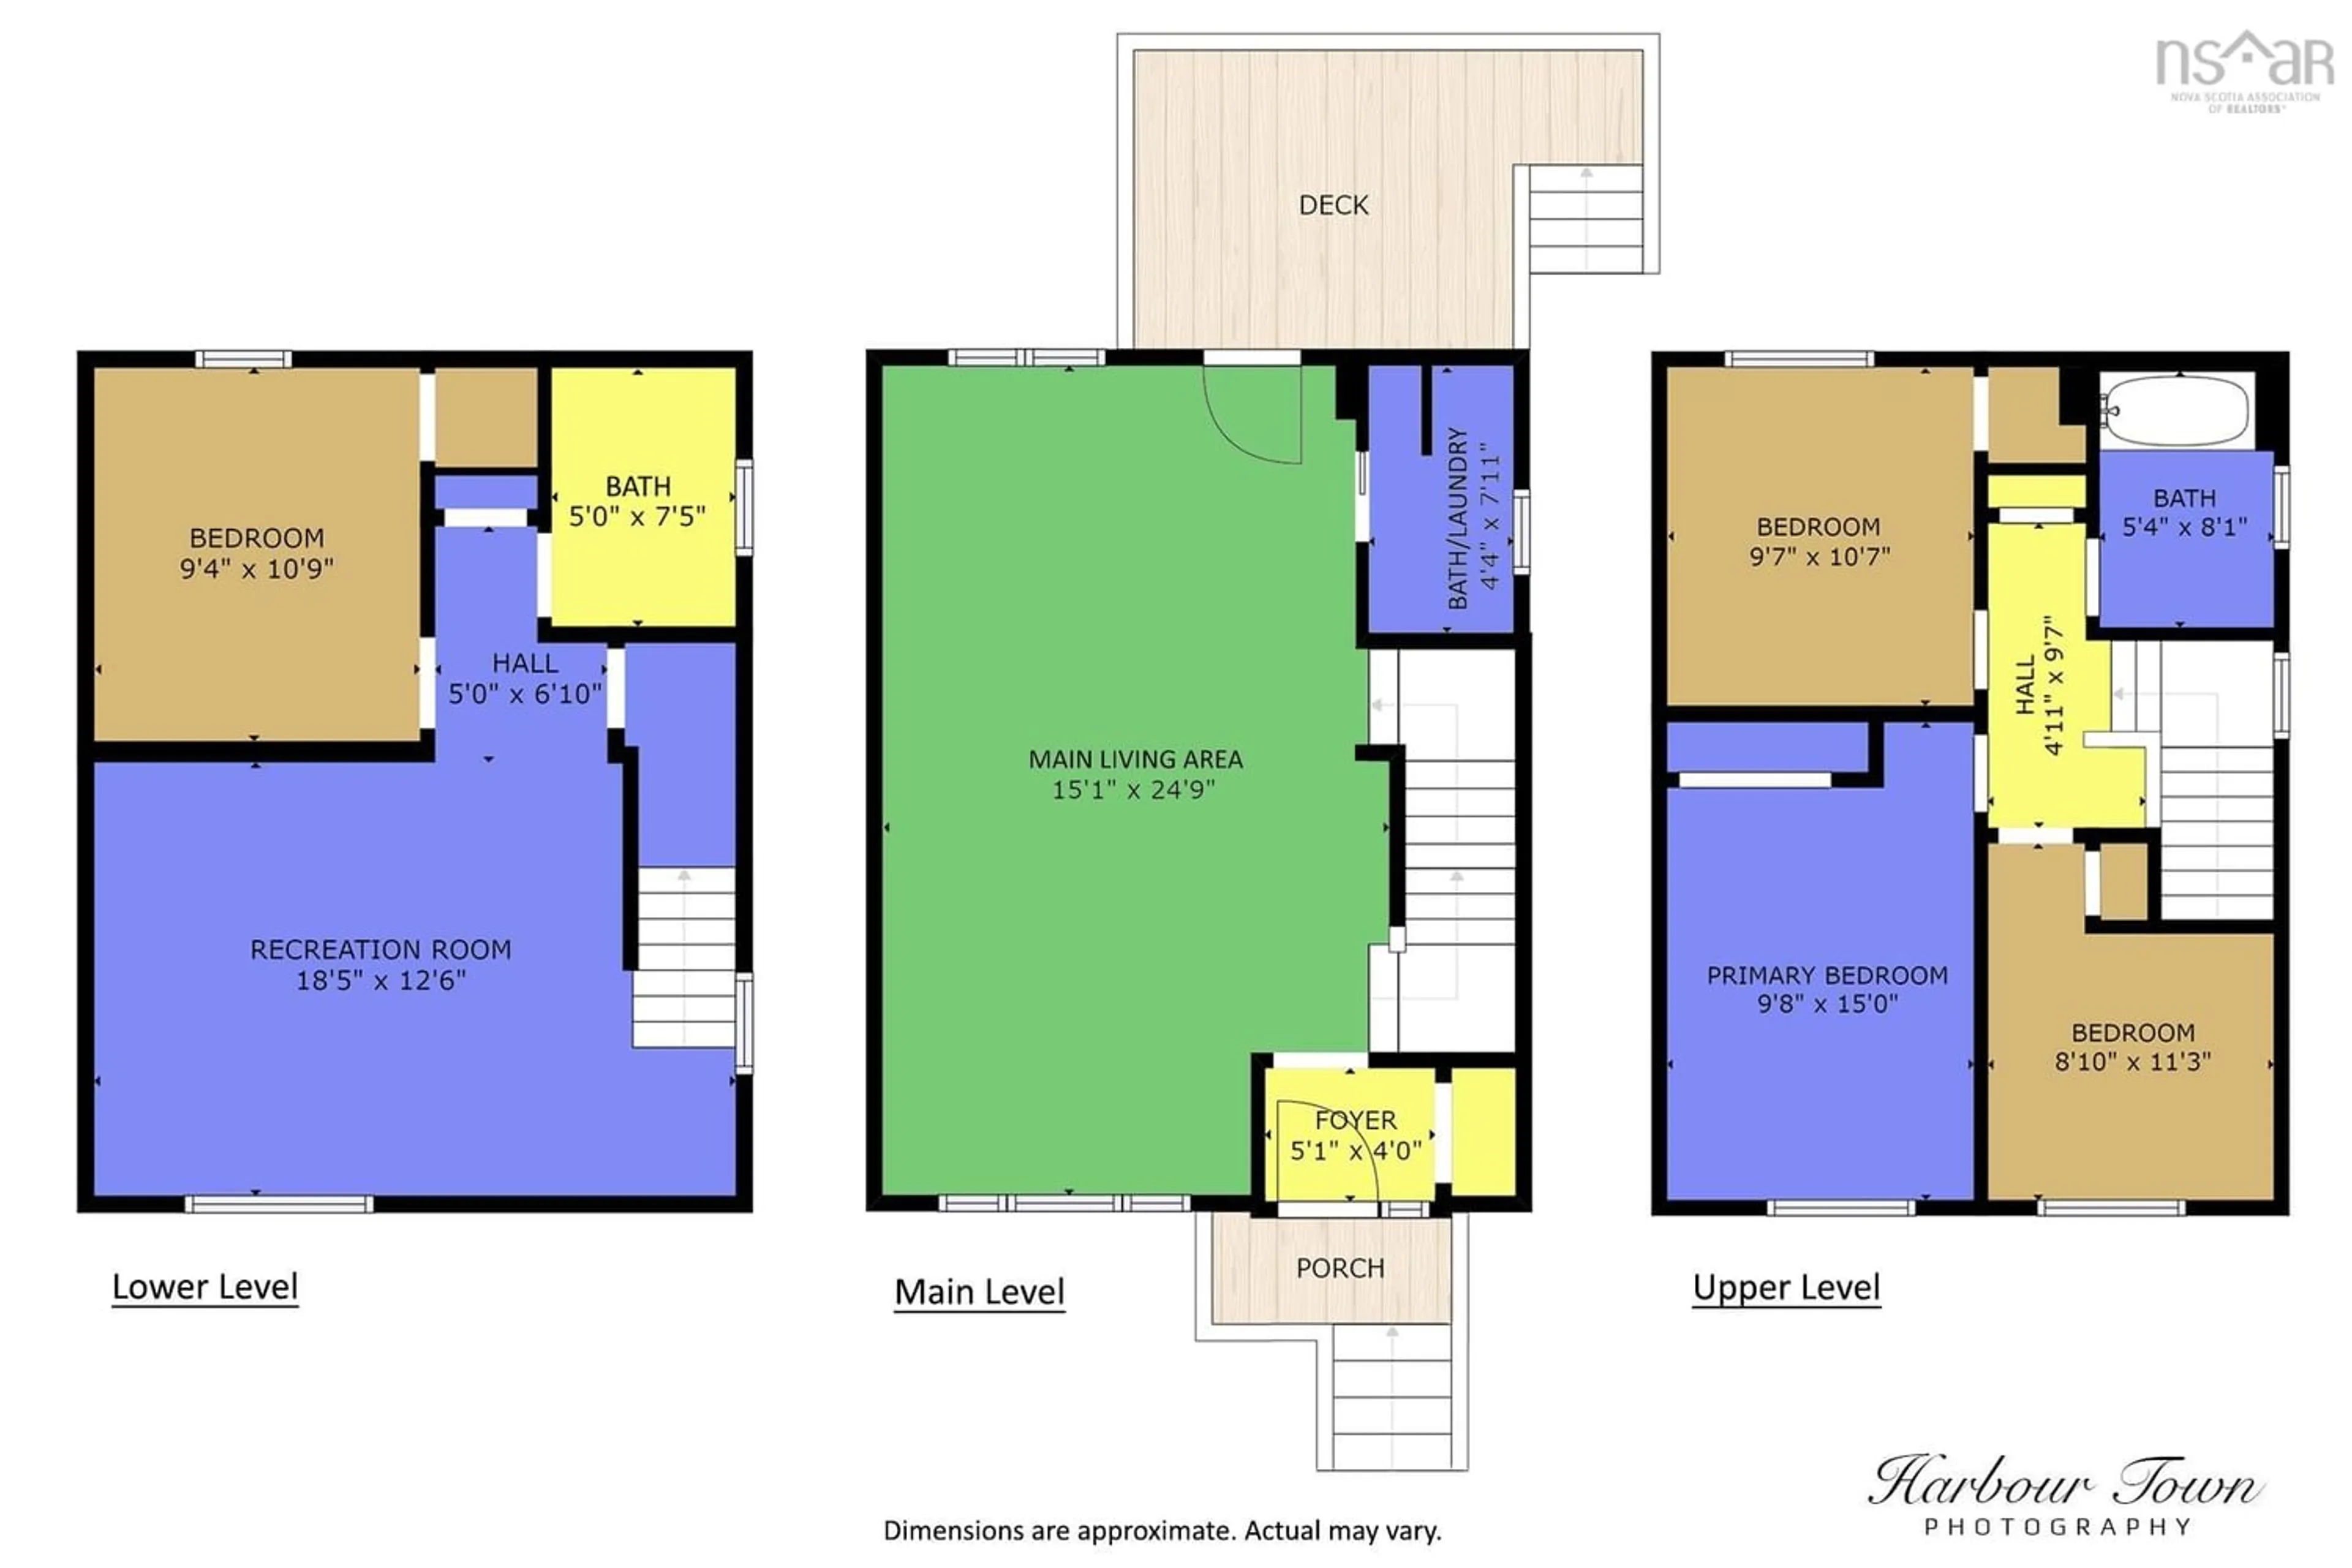 Floor plan for 631 Herring Cove Rd, Spryfield Nova Scotia B3R 1X8